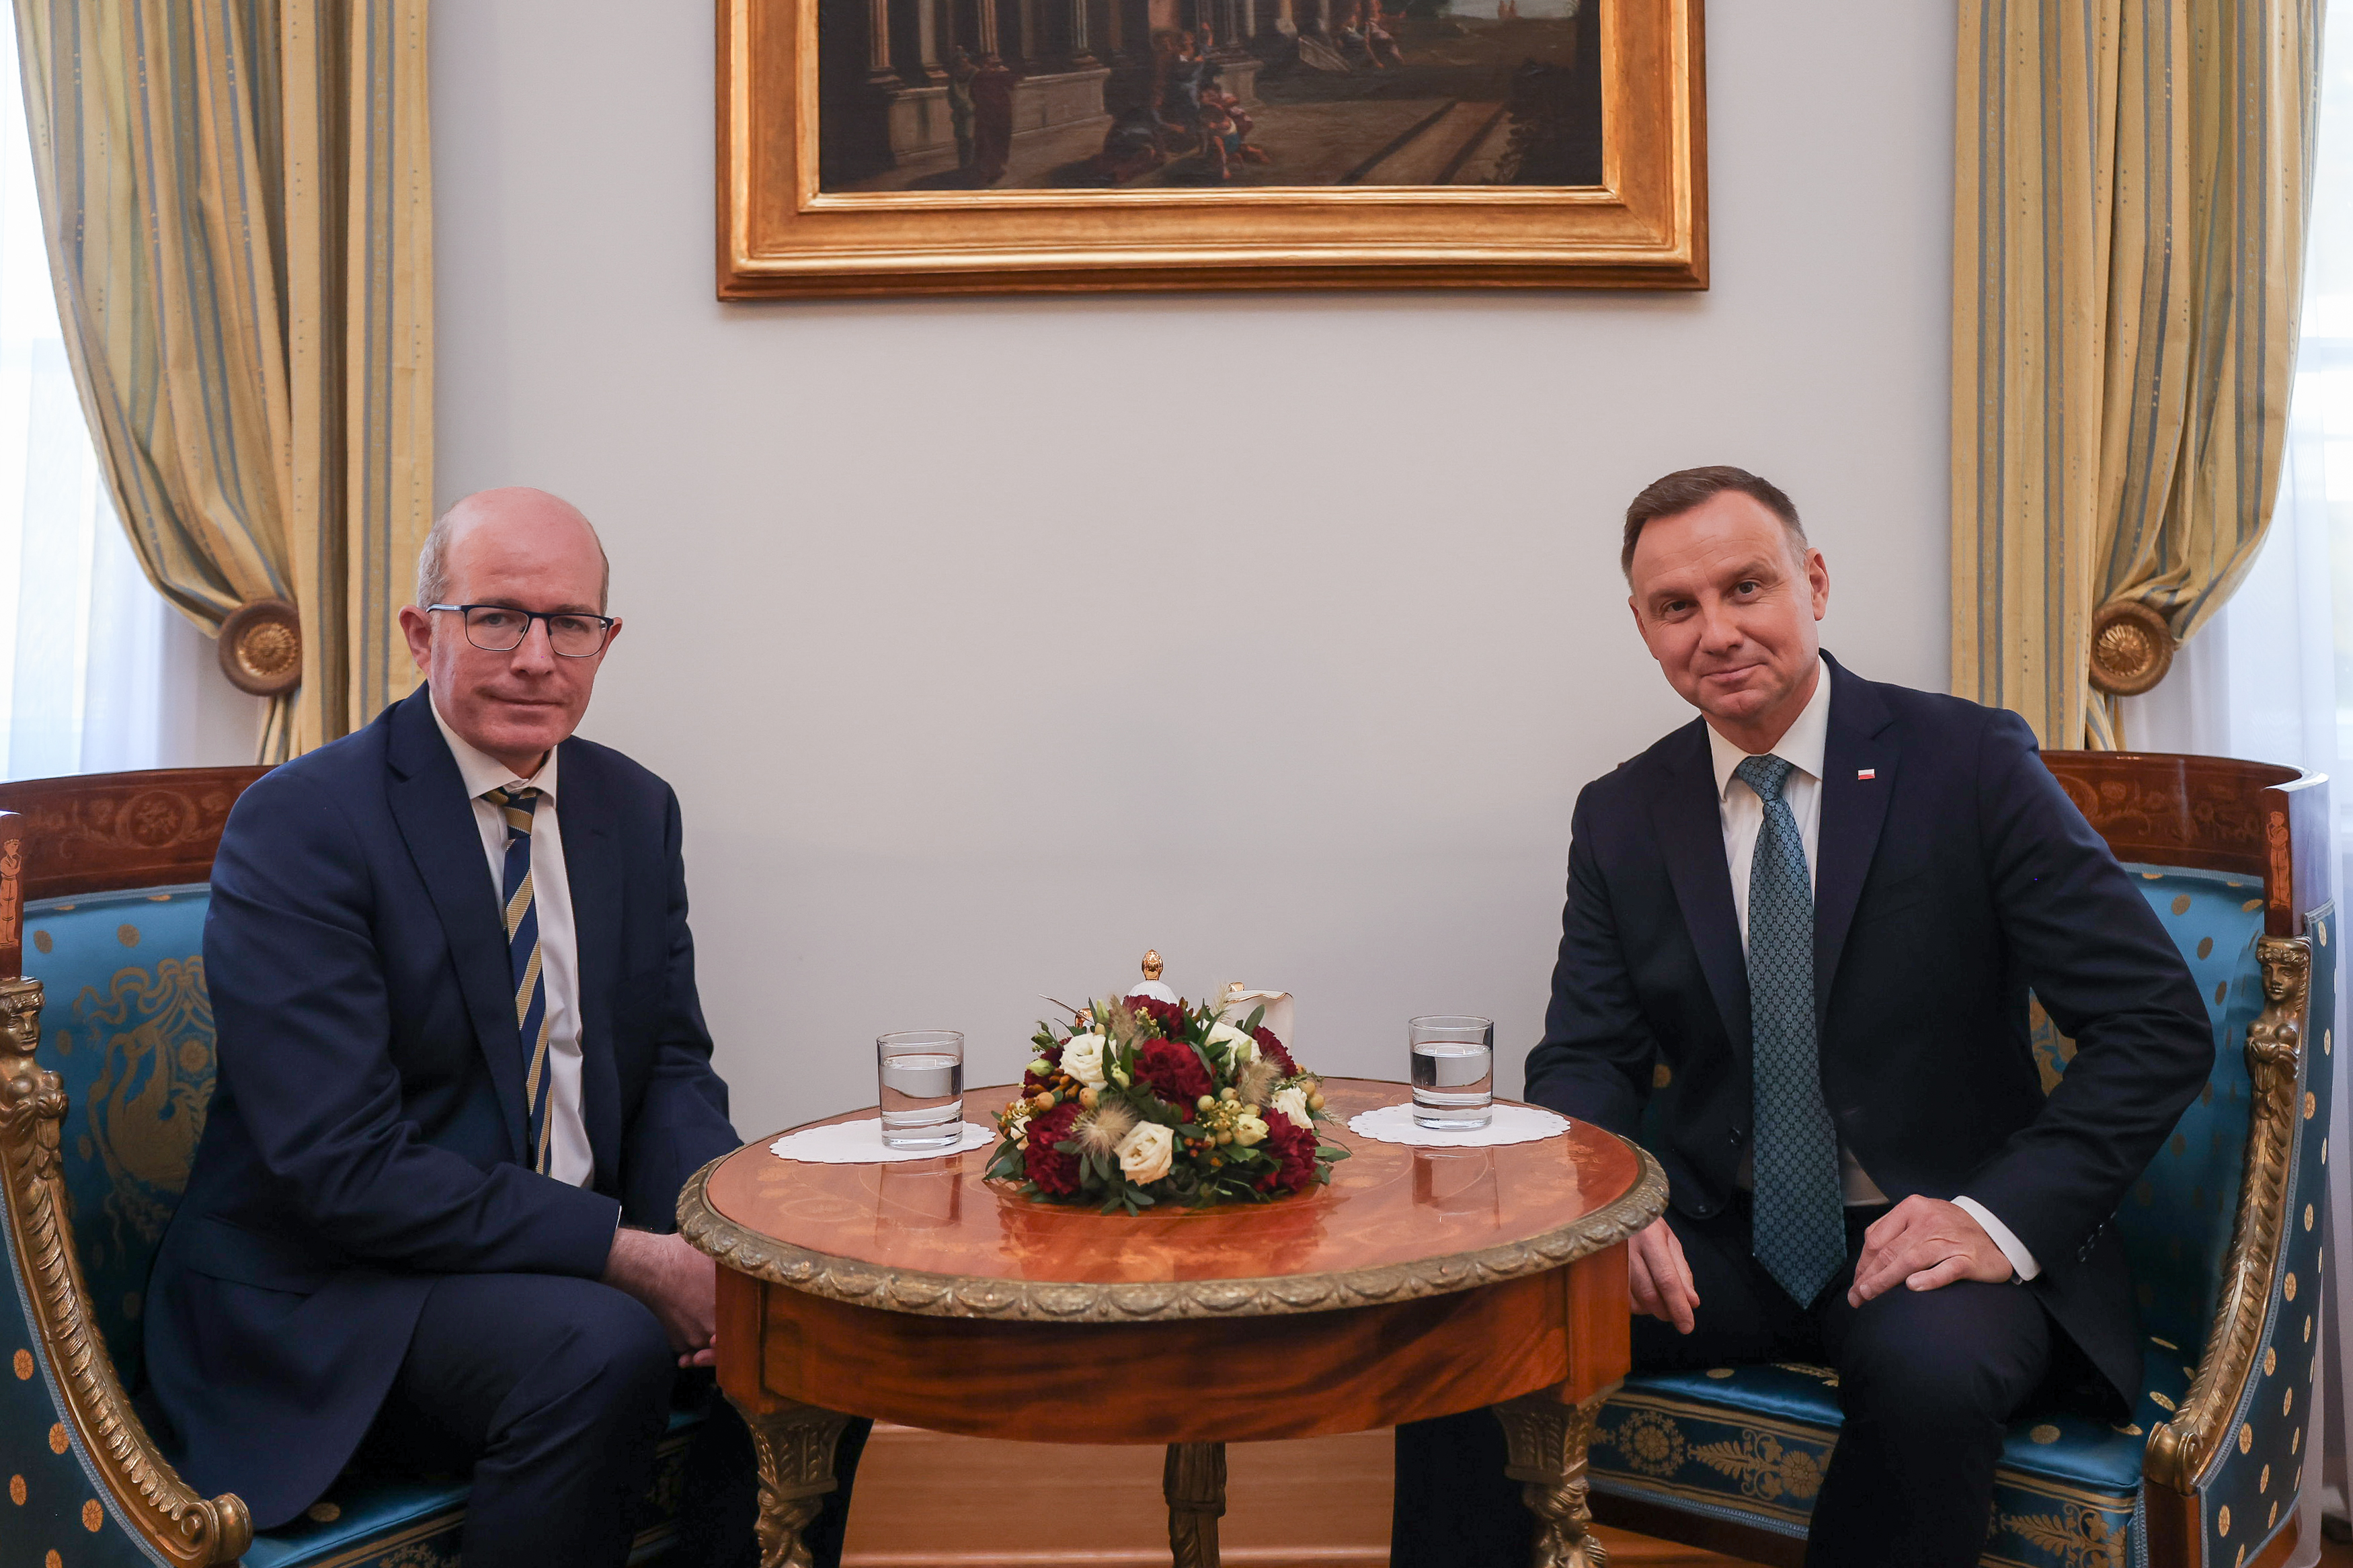 Ambassador Haughey presents credentials to President Andrzej Duda